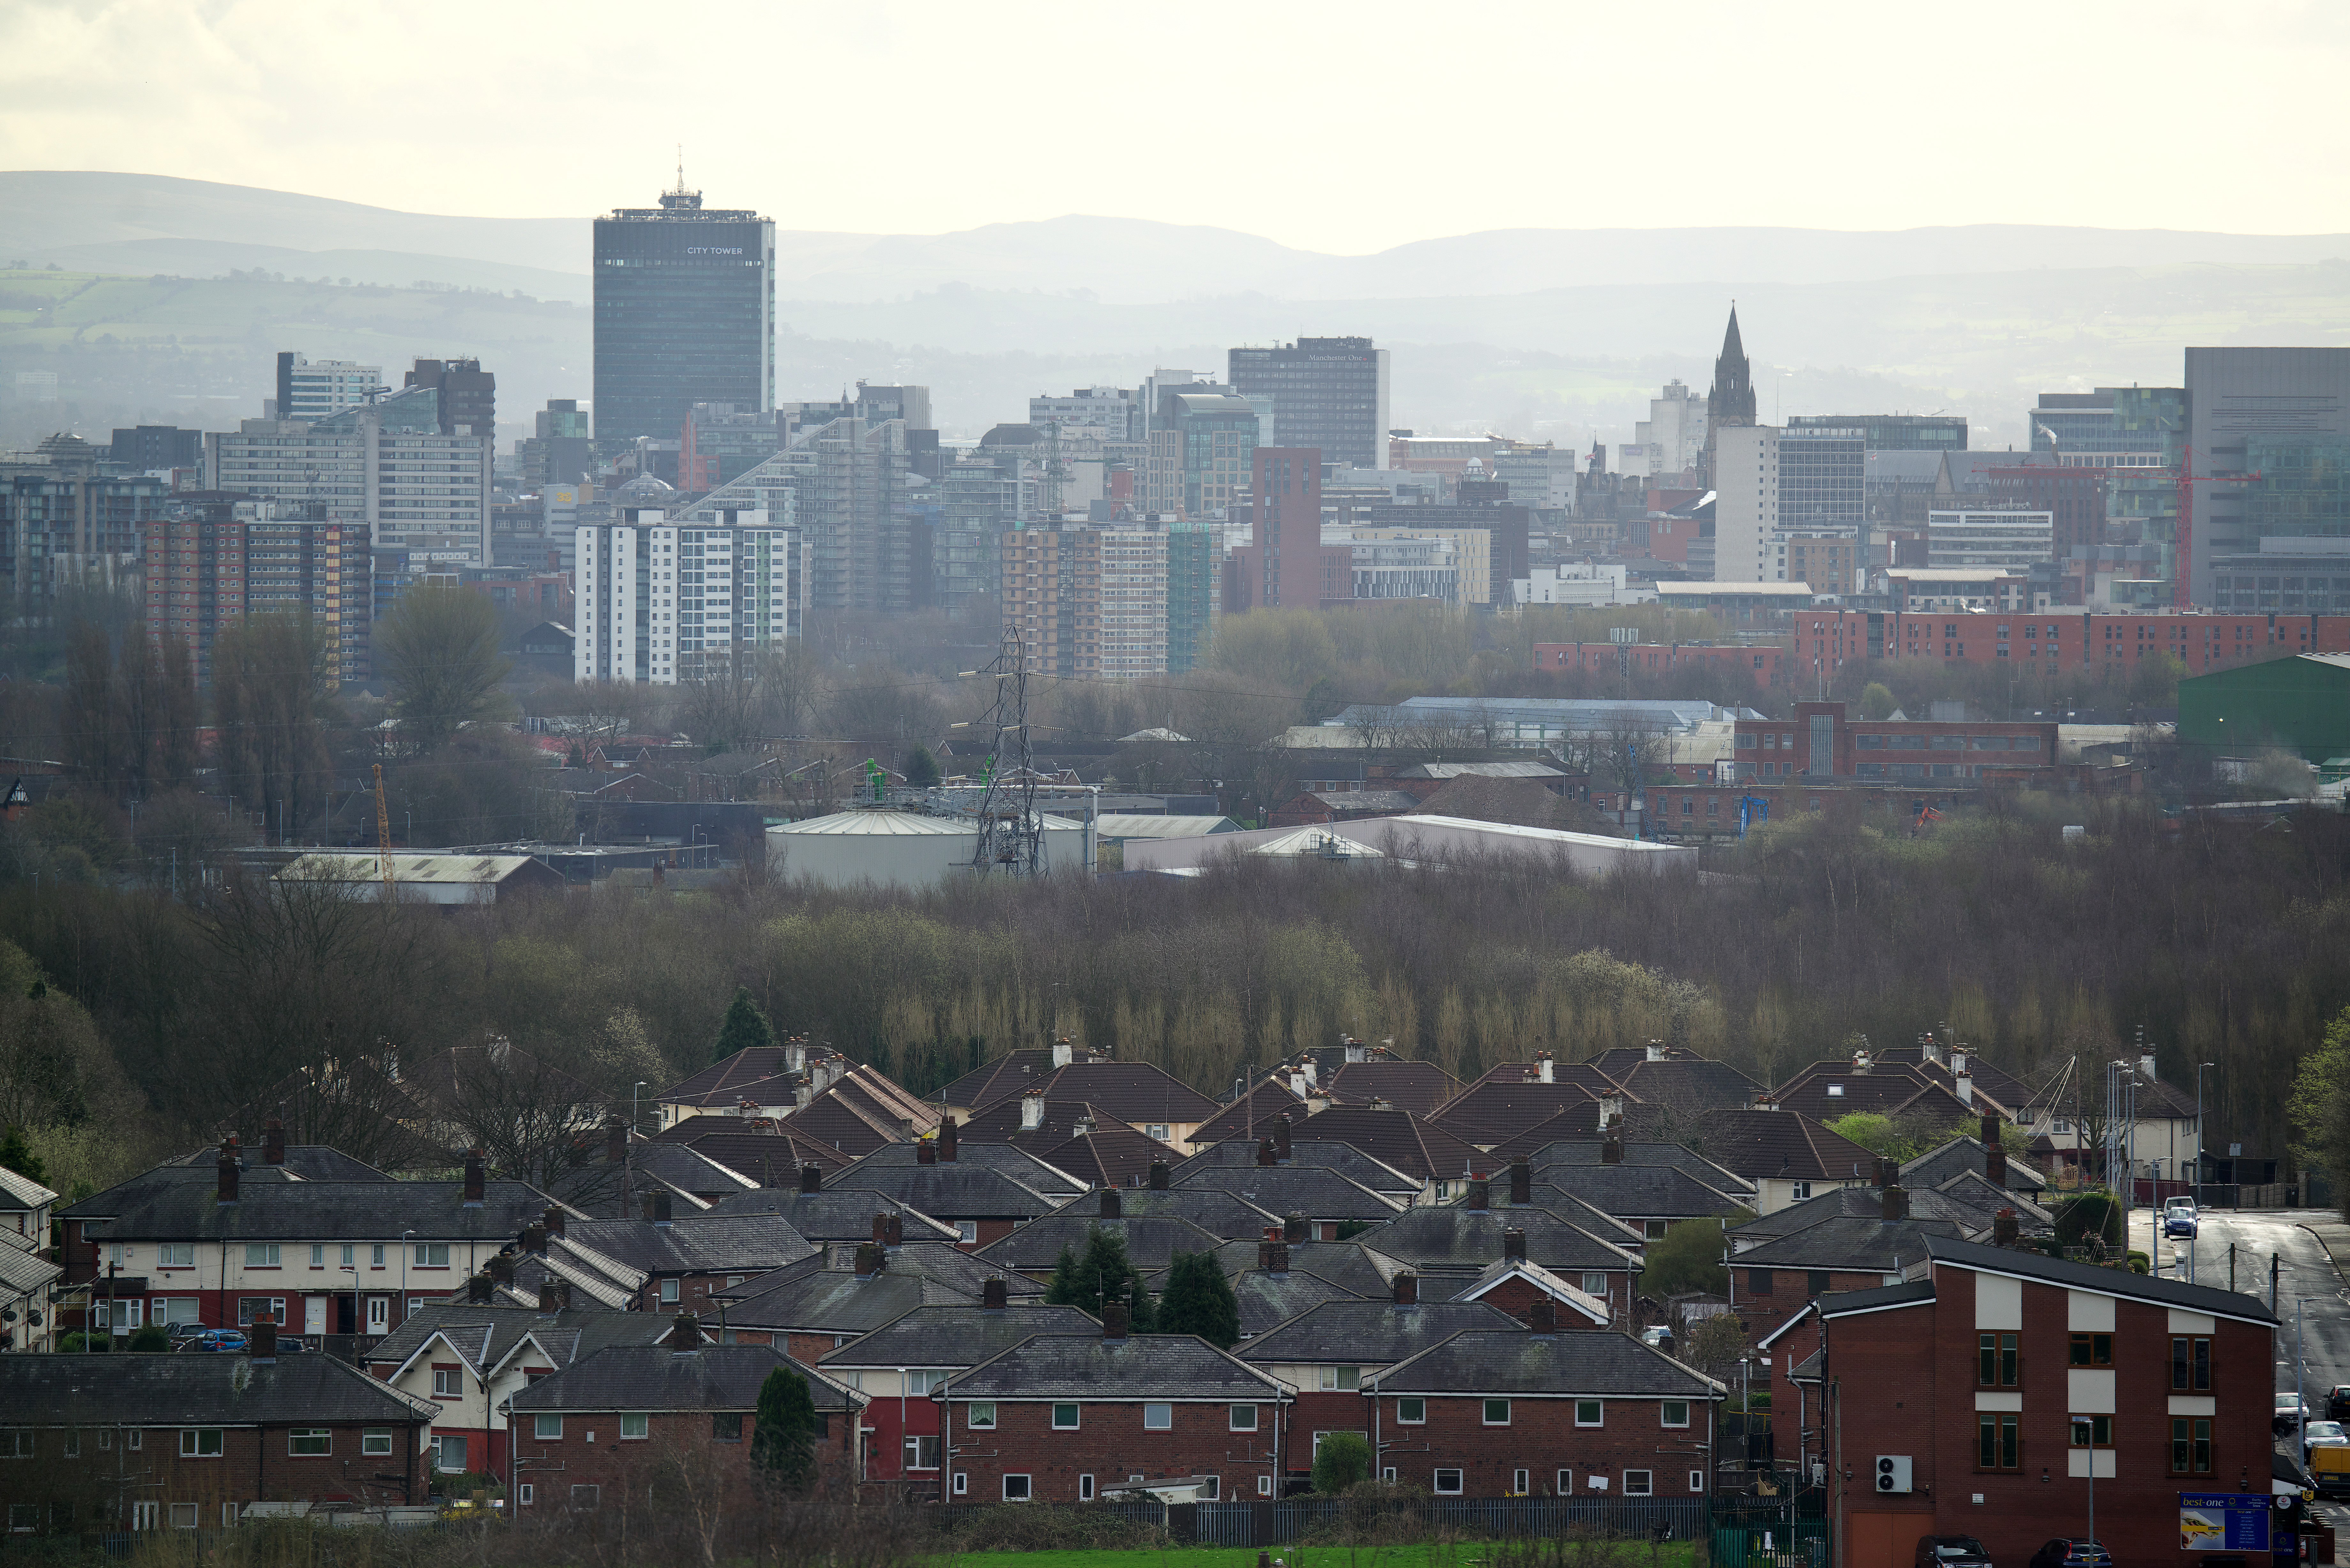 skyline of Manchester